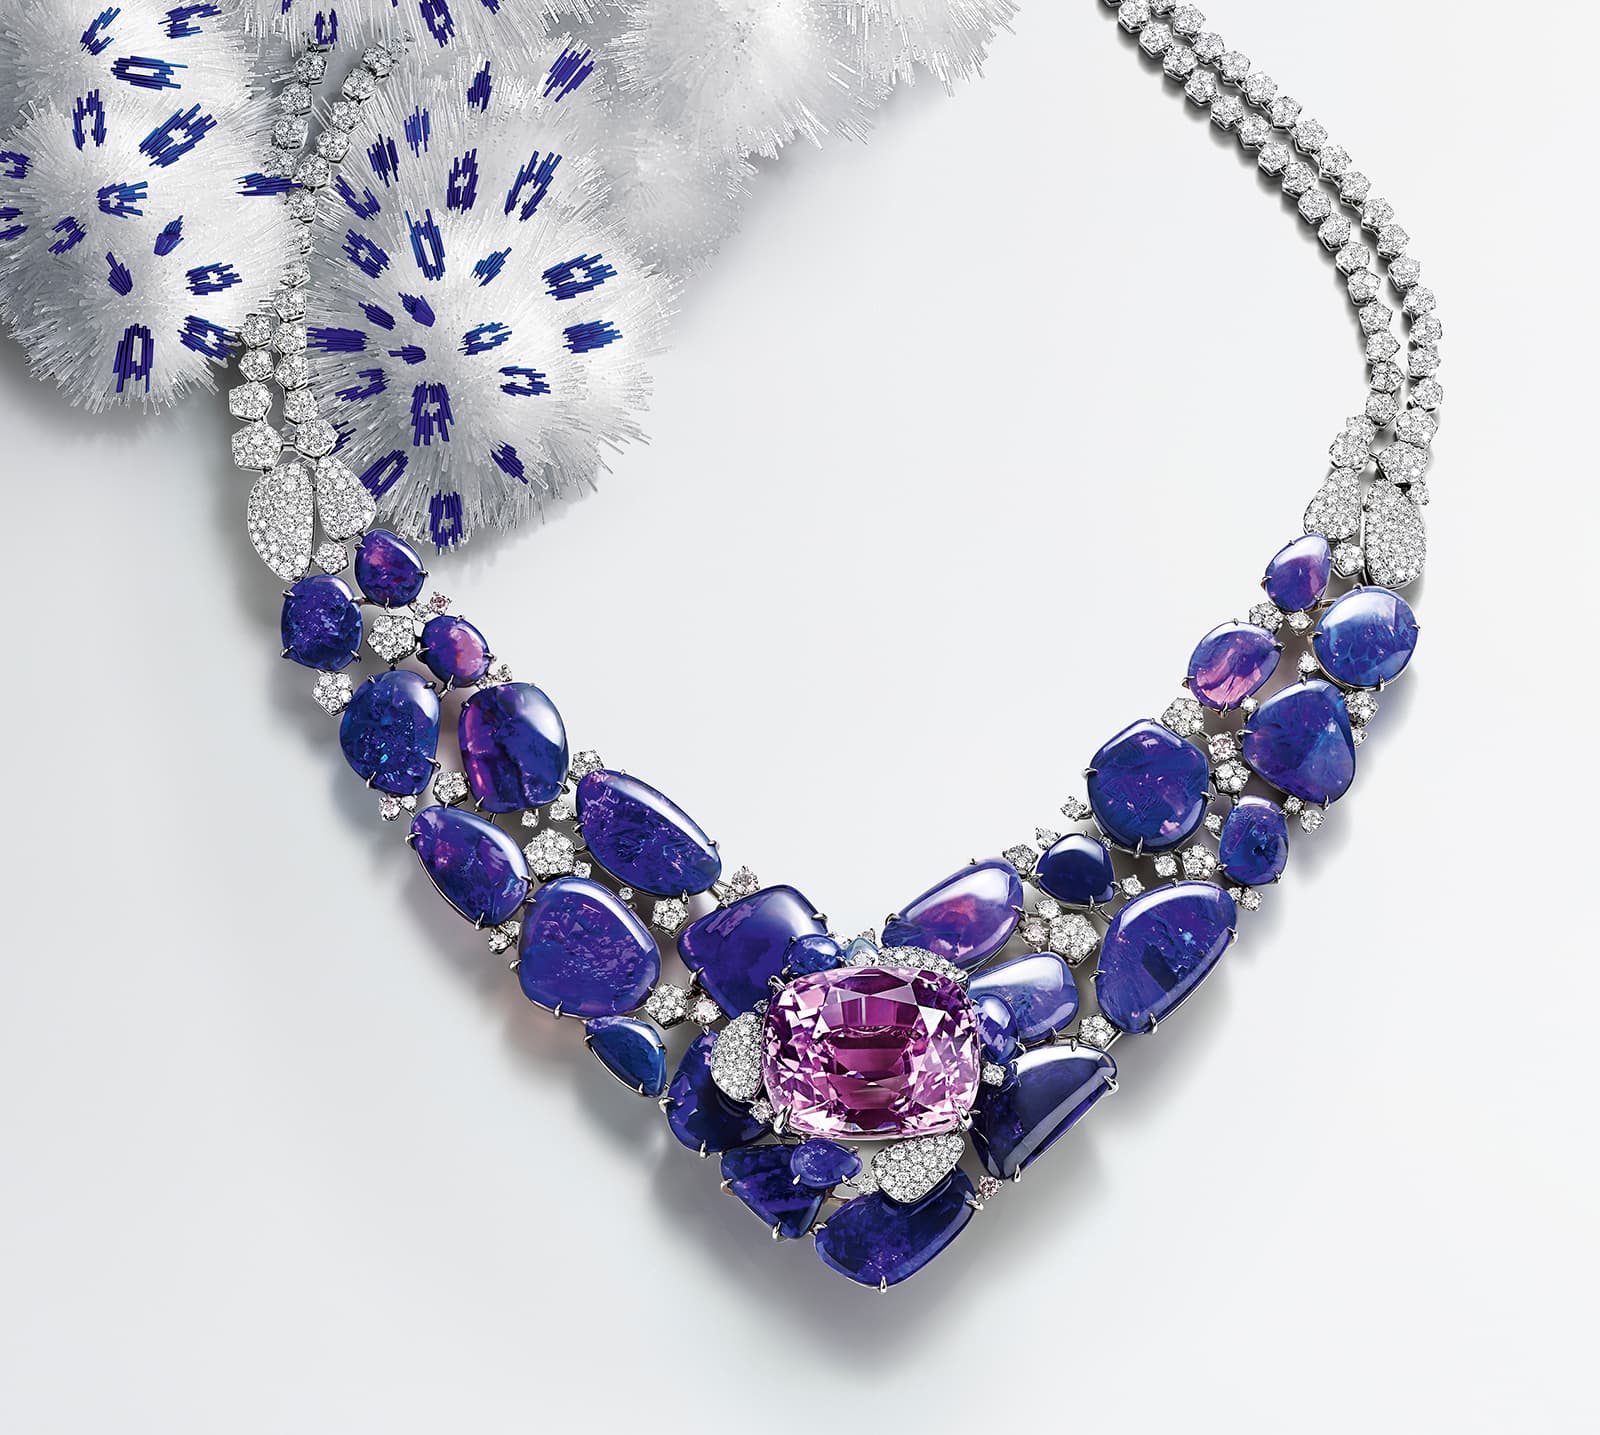 Cartier SUR[NATUREL] high jewellery necklace, set with a 71.80 carat kunzite, black opals and diamonds